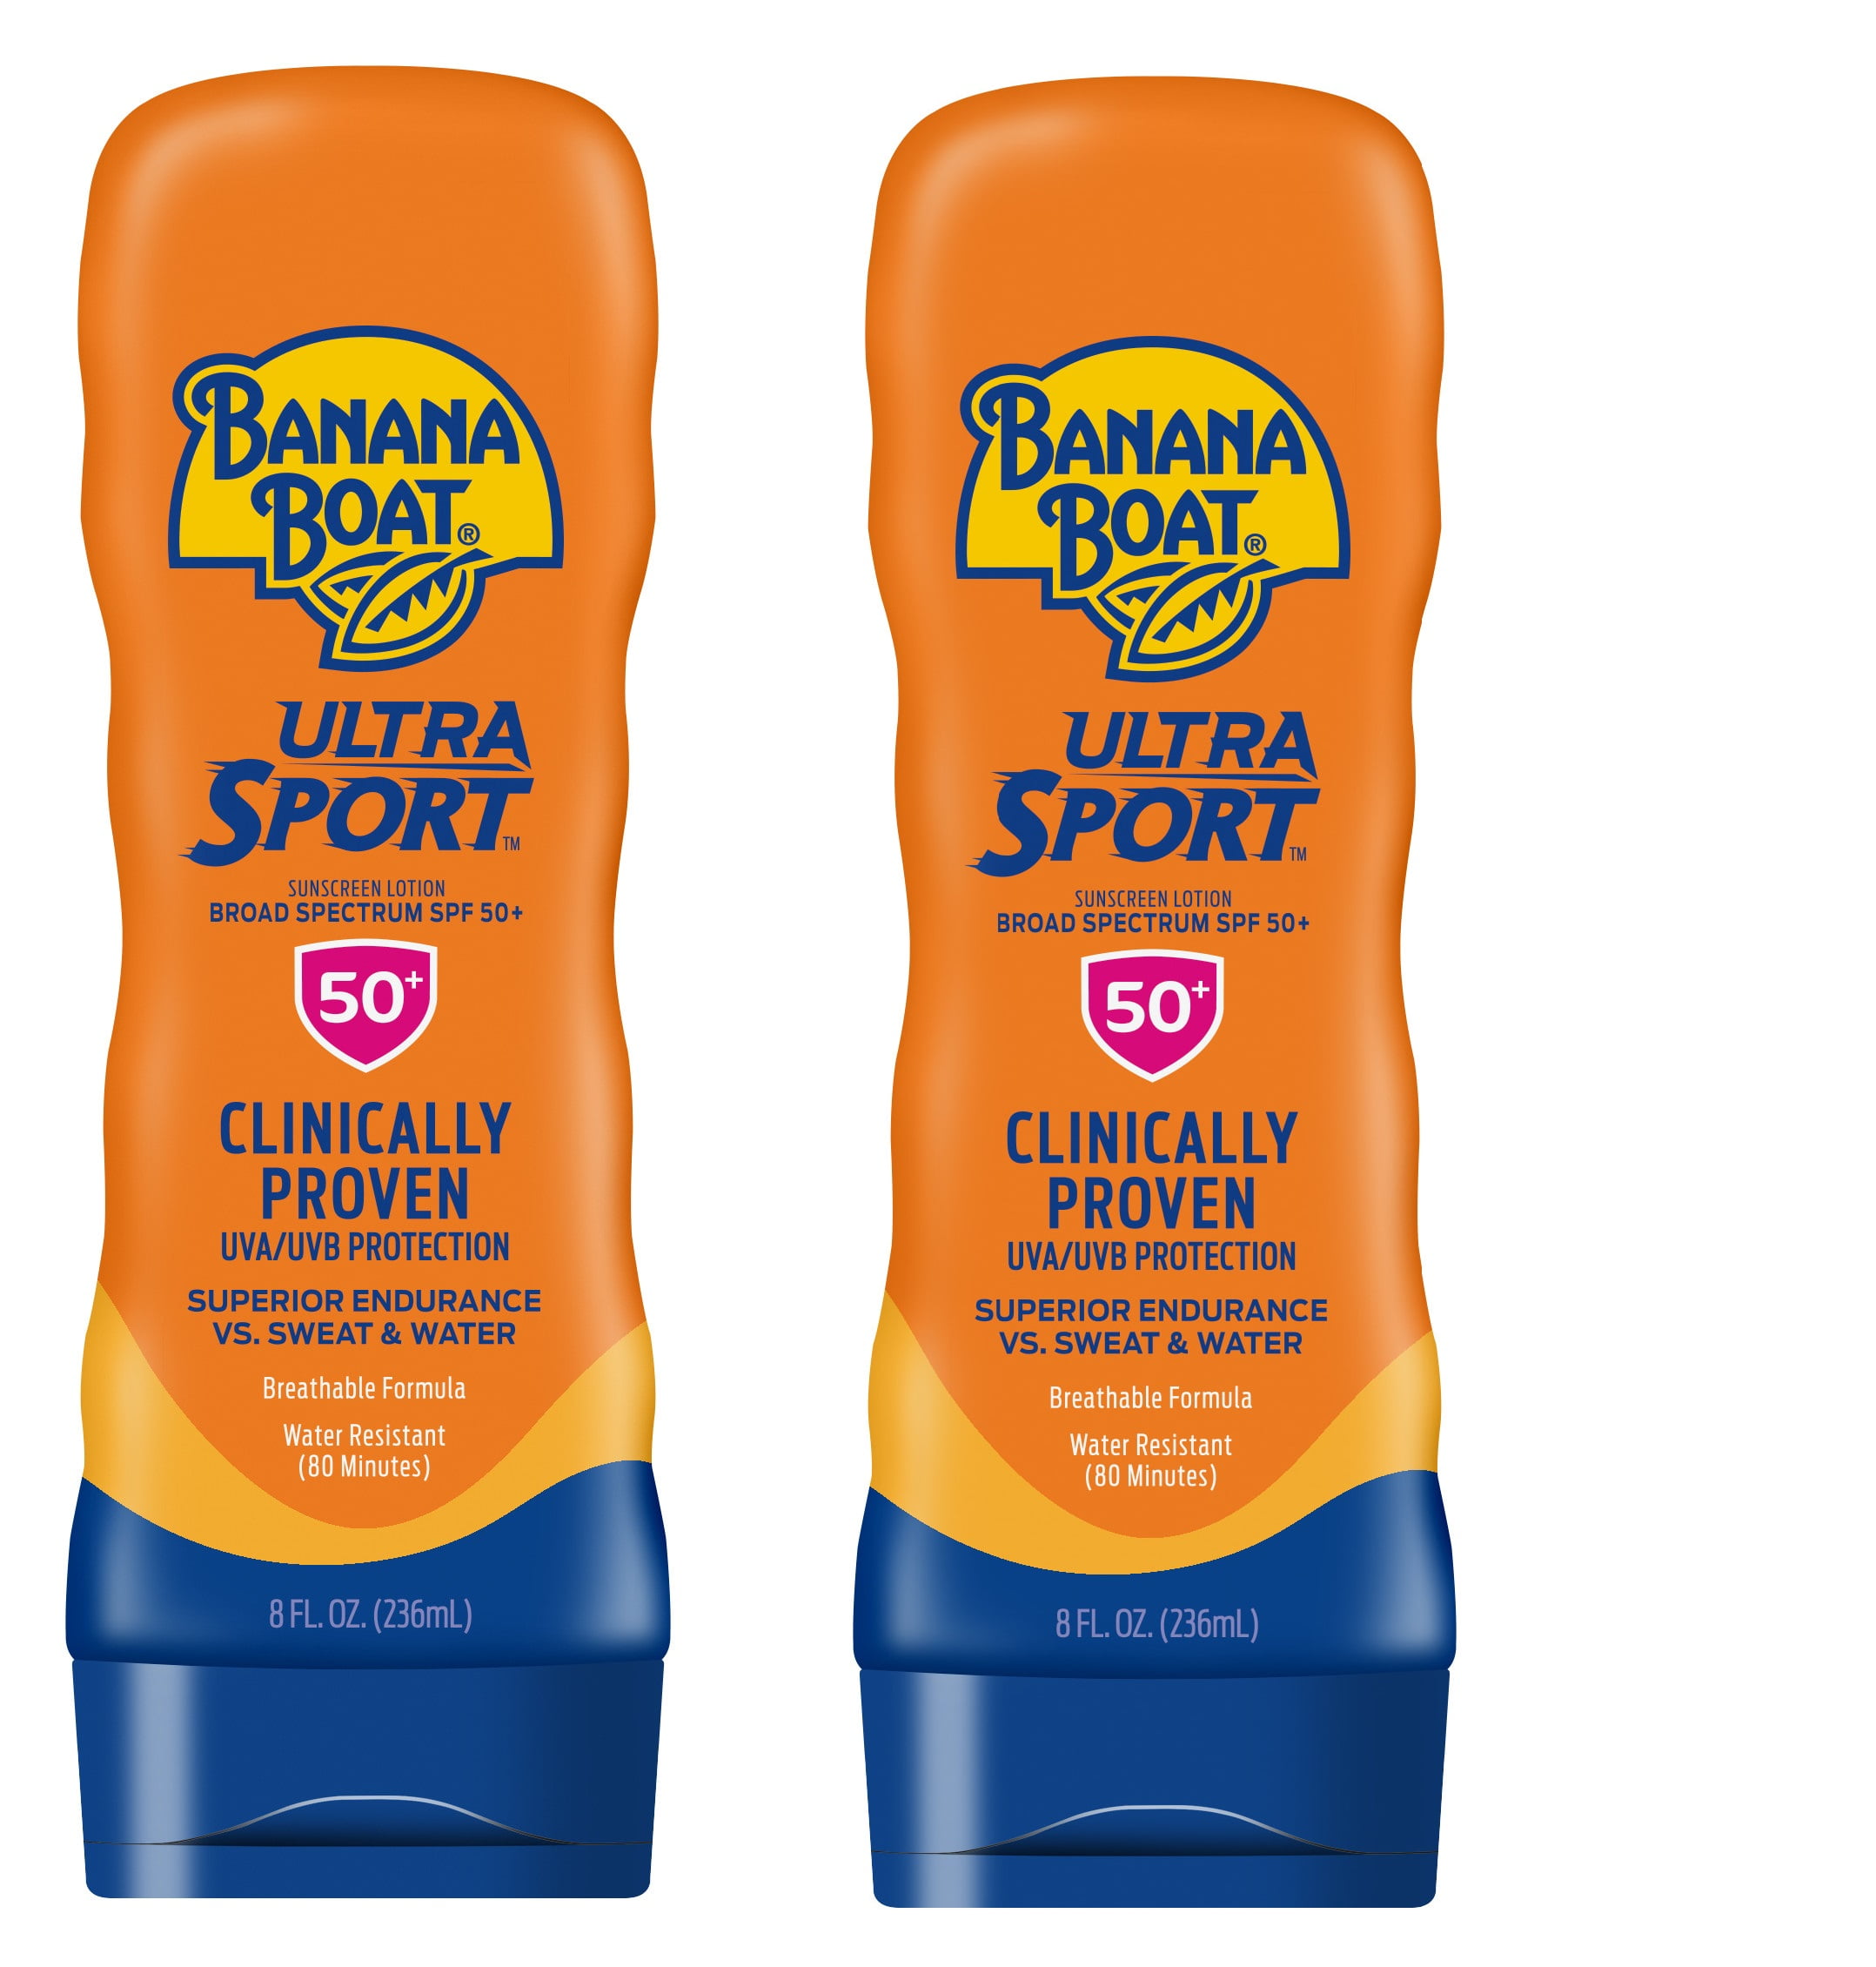 Banana Boat Ultra Sport Sunscreen Lotion SPF 50+, 8 oz